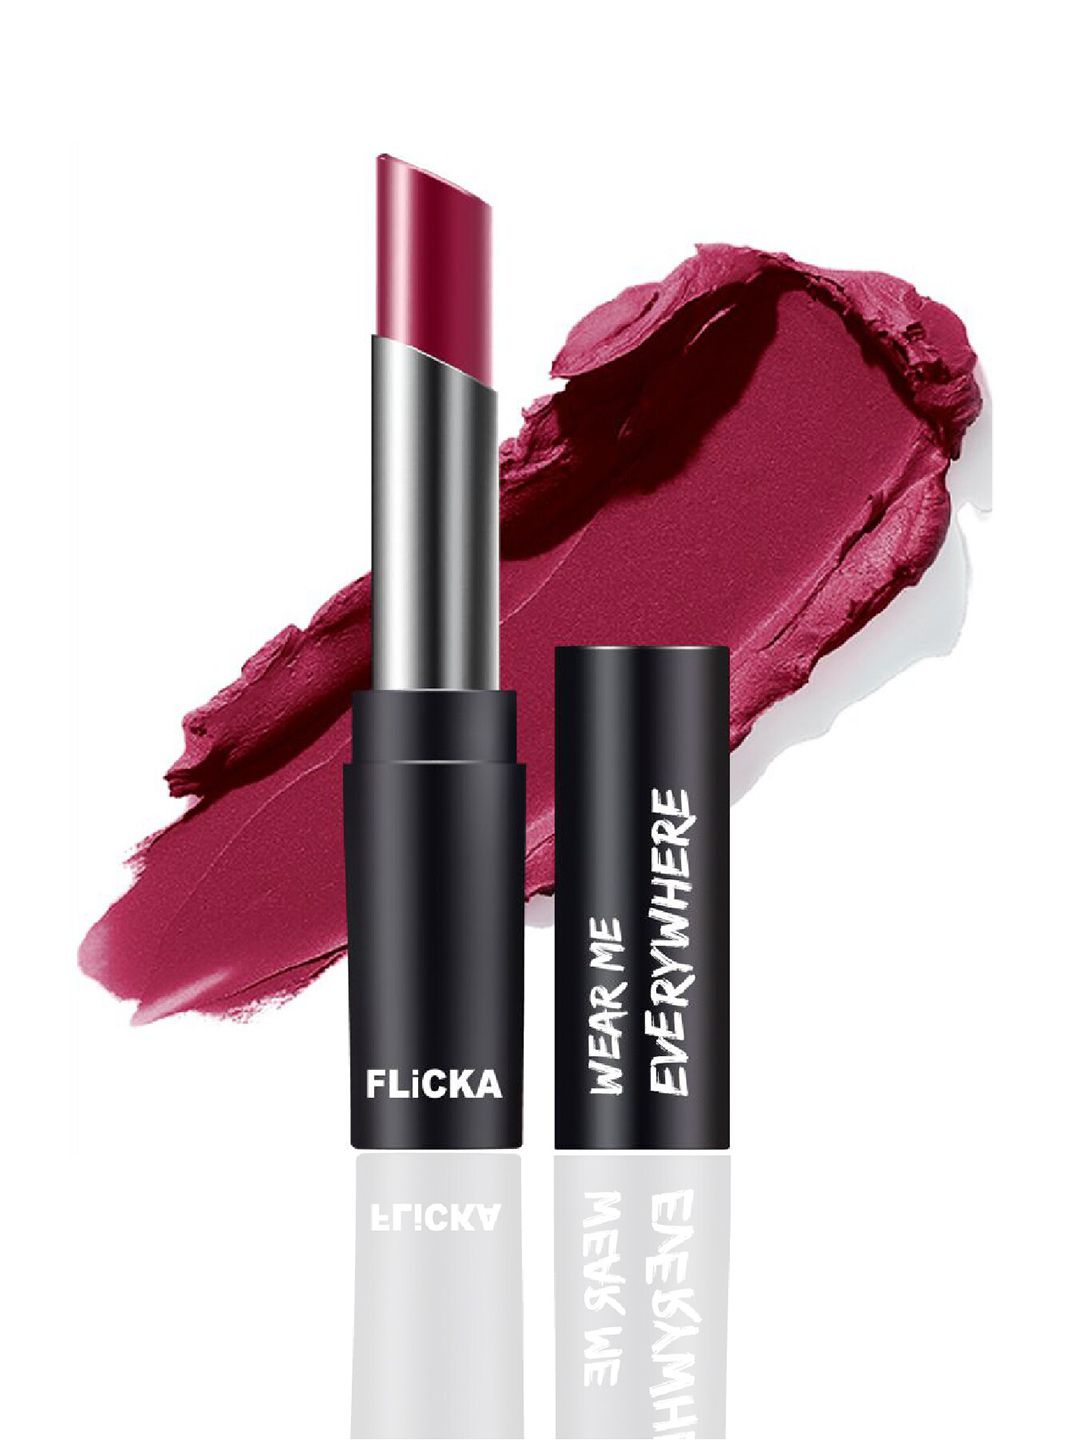 FLiCKA Wear Me Everywhere Creamy Matte Lipstick - Mauve Mountain 15 Price in India